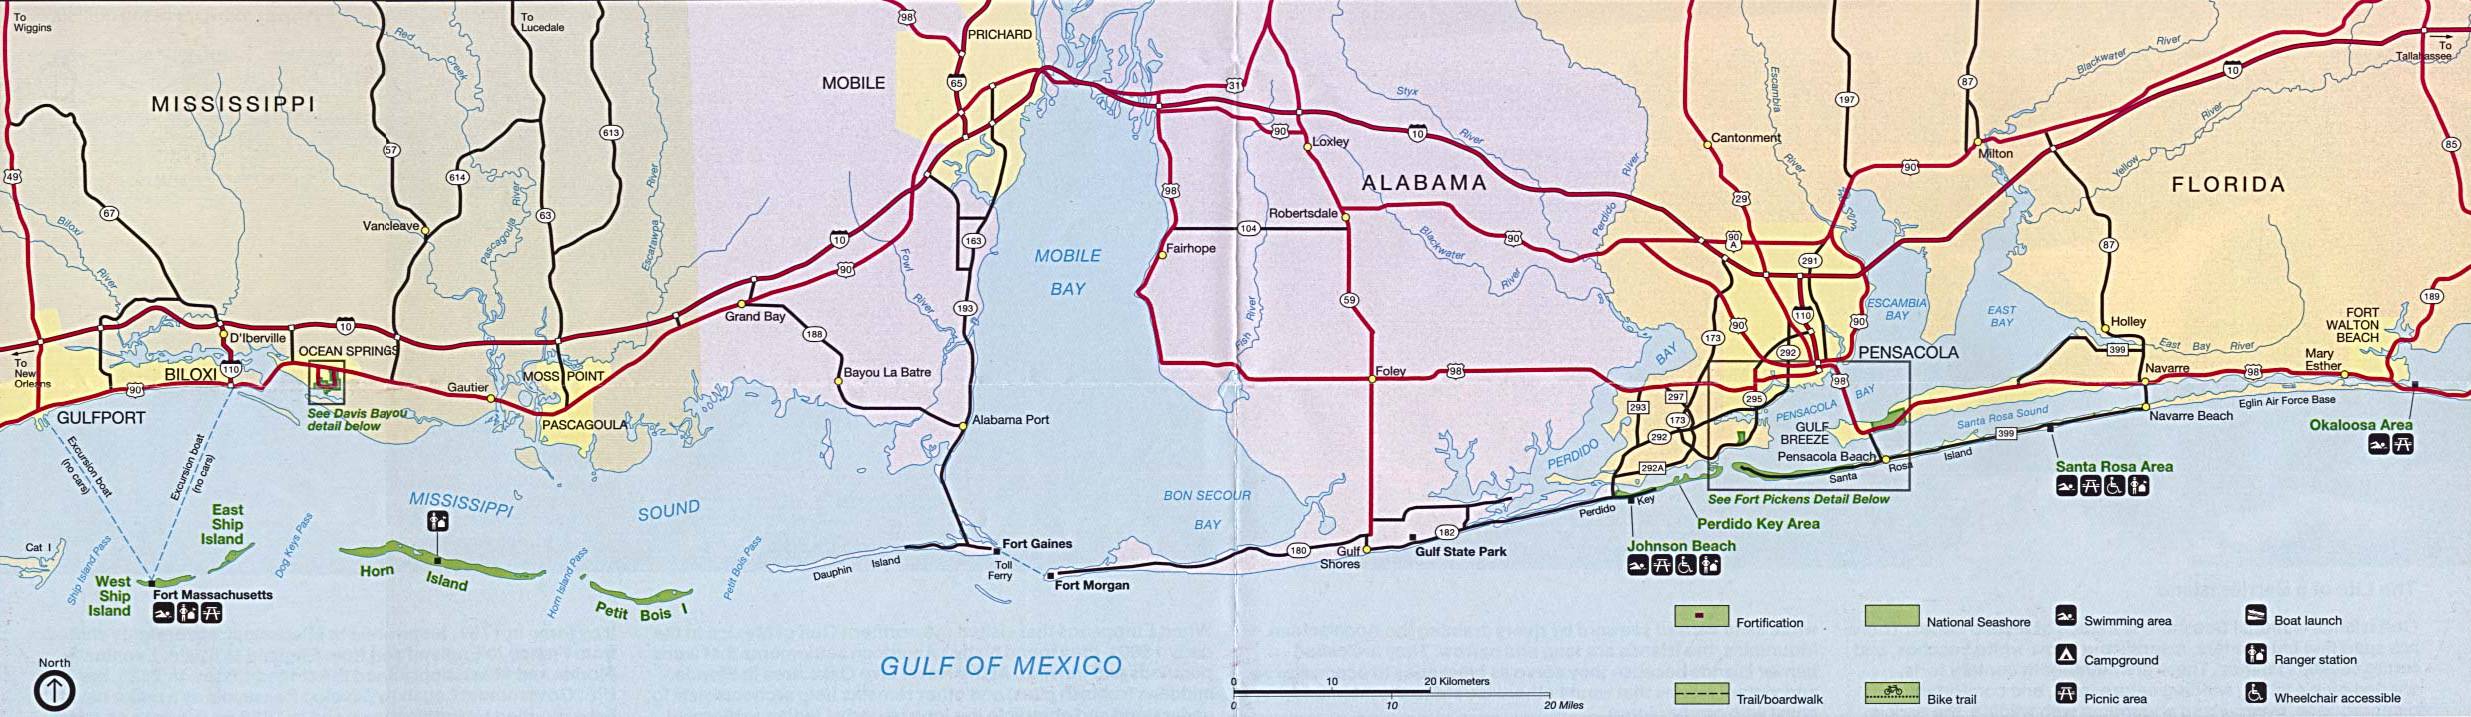 美国亚拉巴马州(Alabama)-GulfofMexico94地图